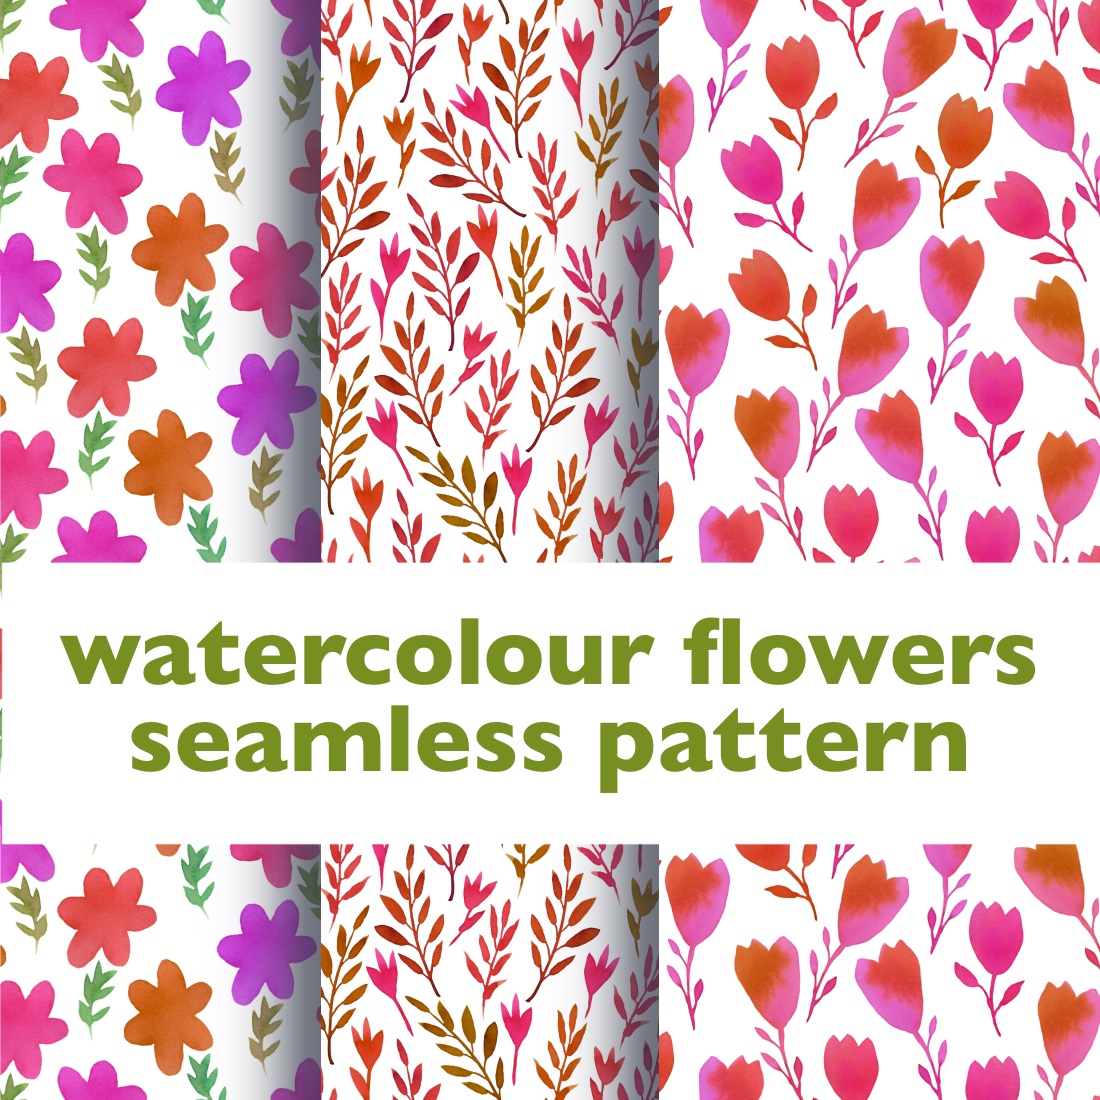 Watercolour Seamless Floral Patterns.